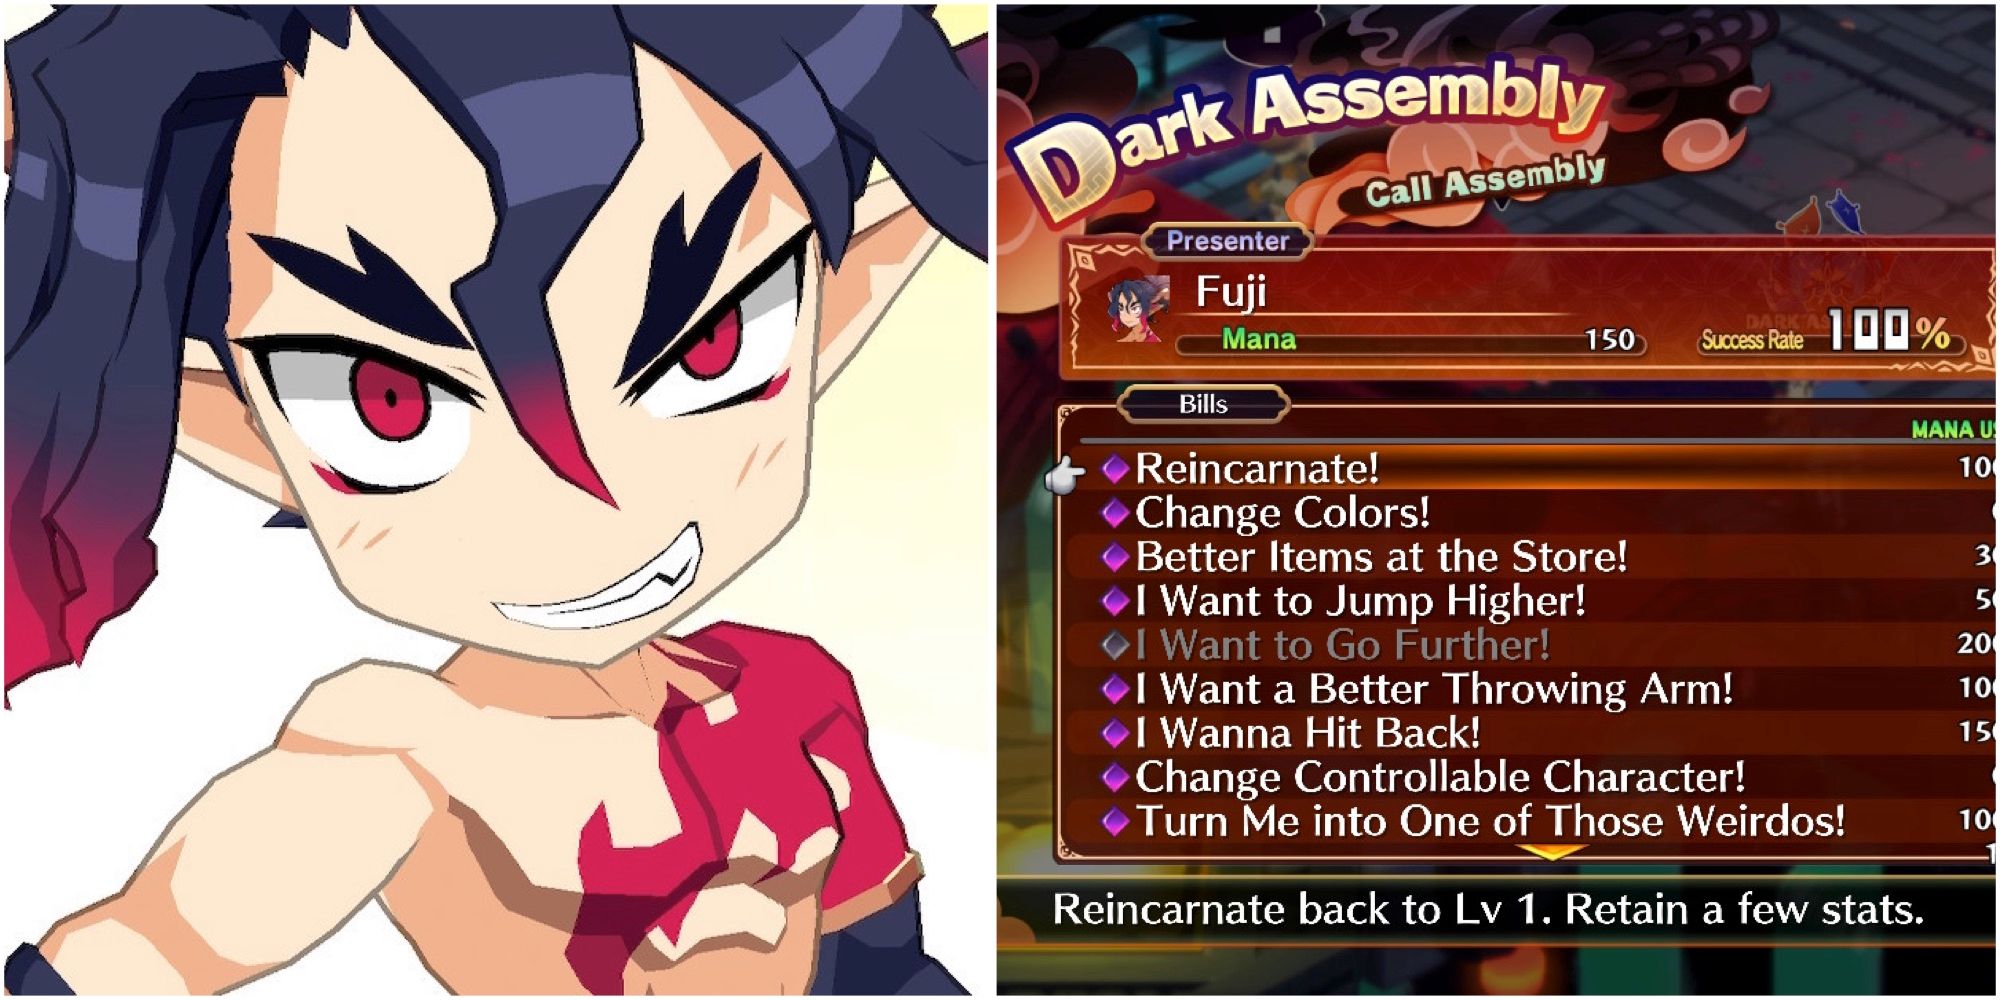 Fuji and The Dark Assembly menu in Disgaea 7